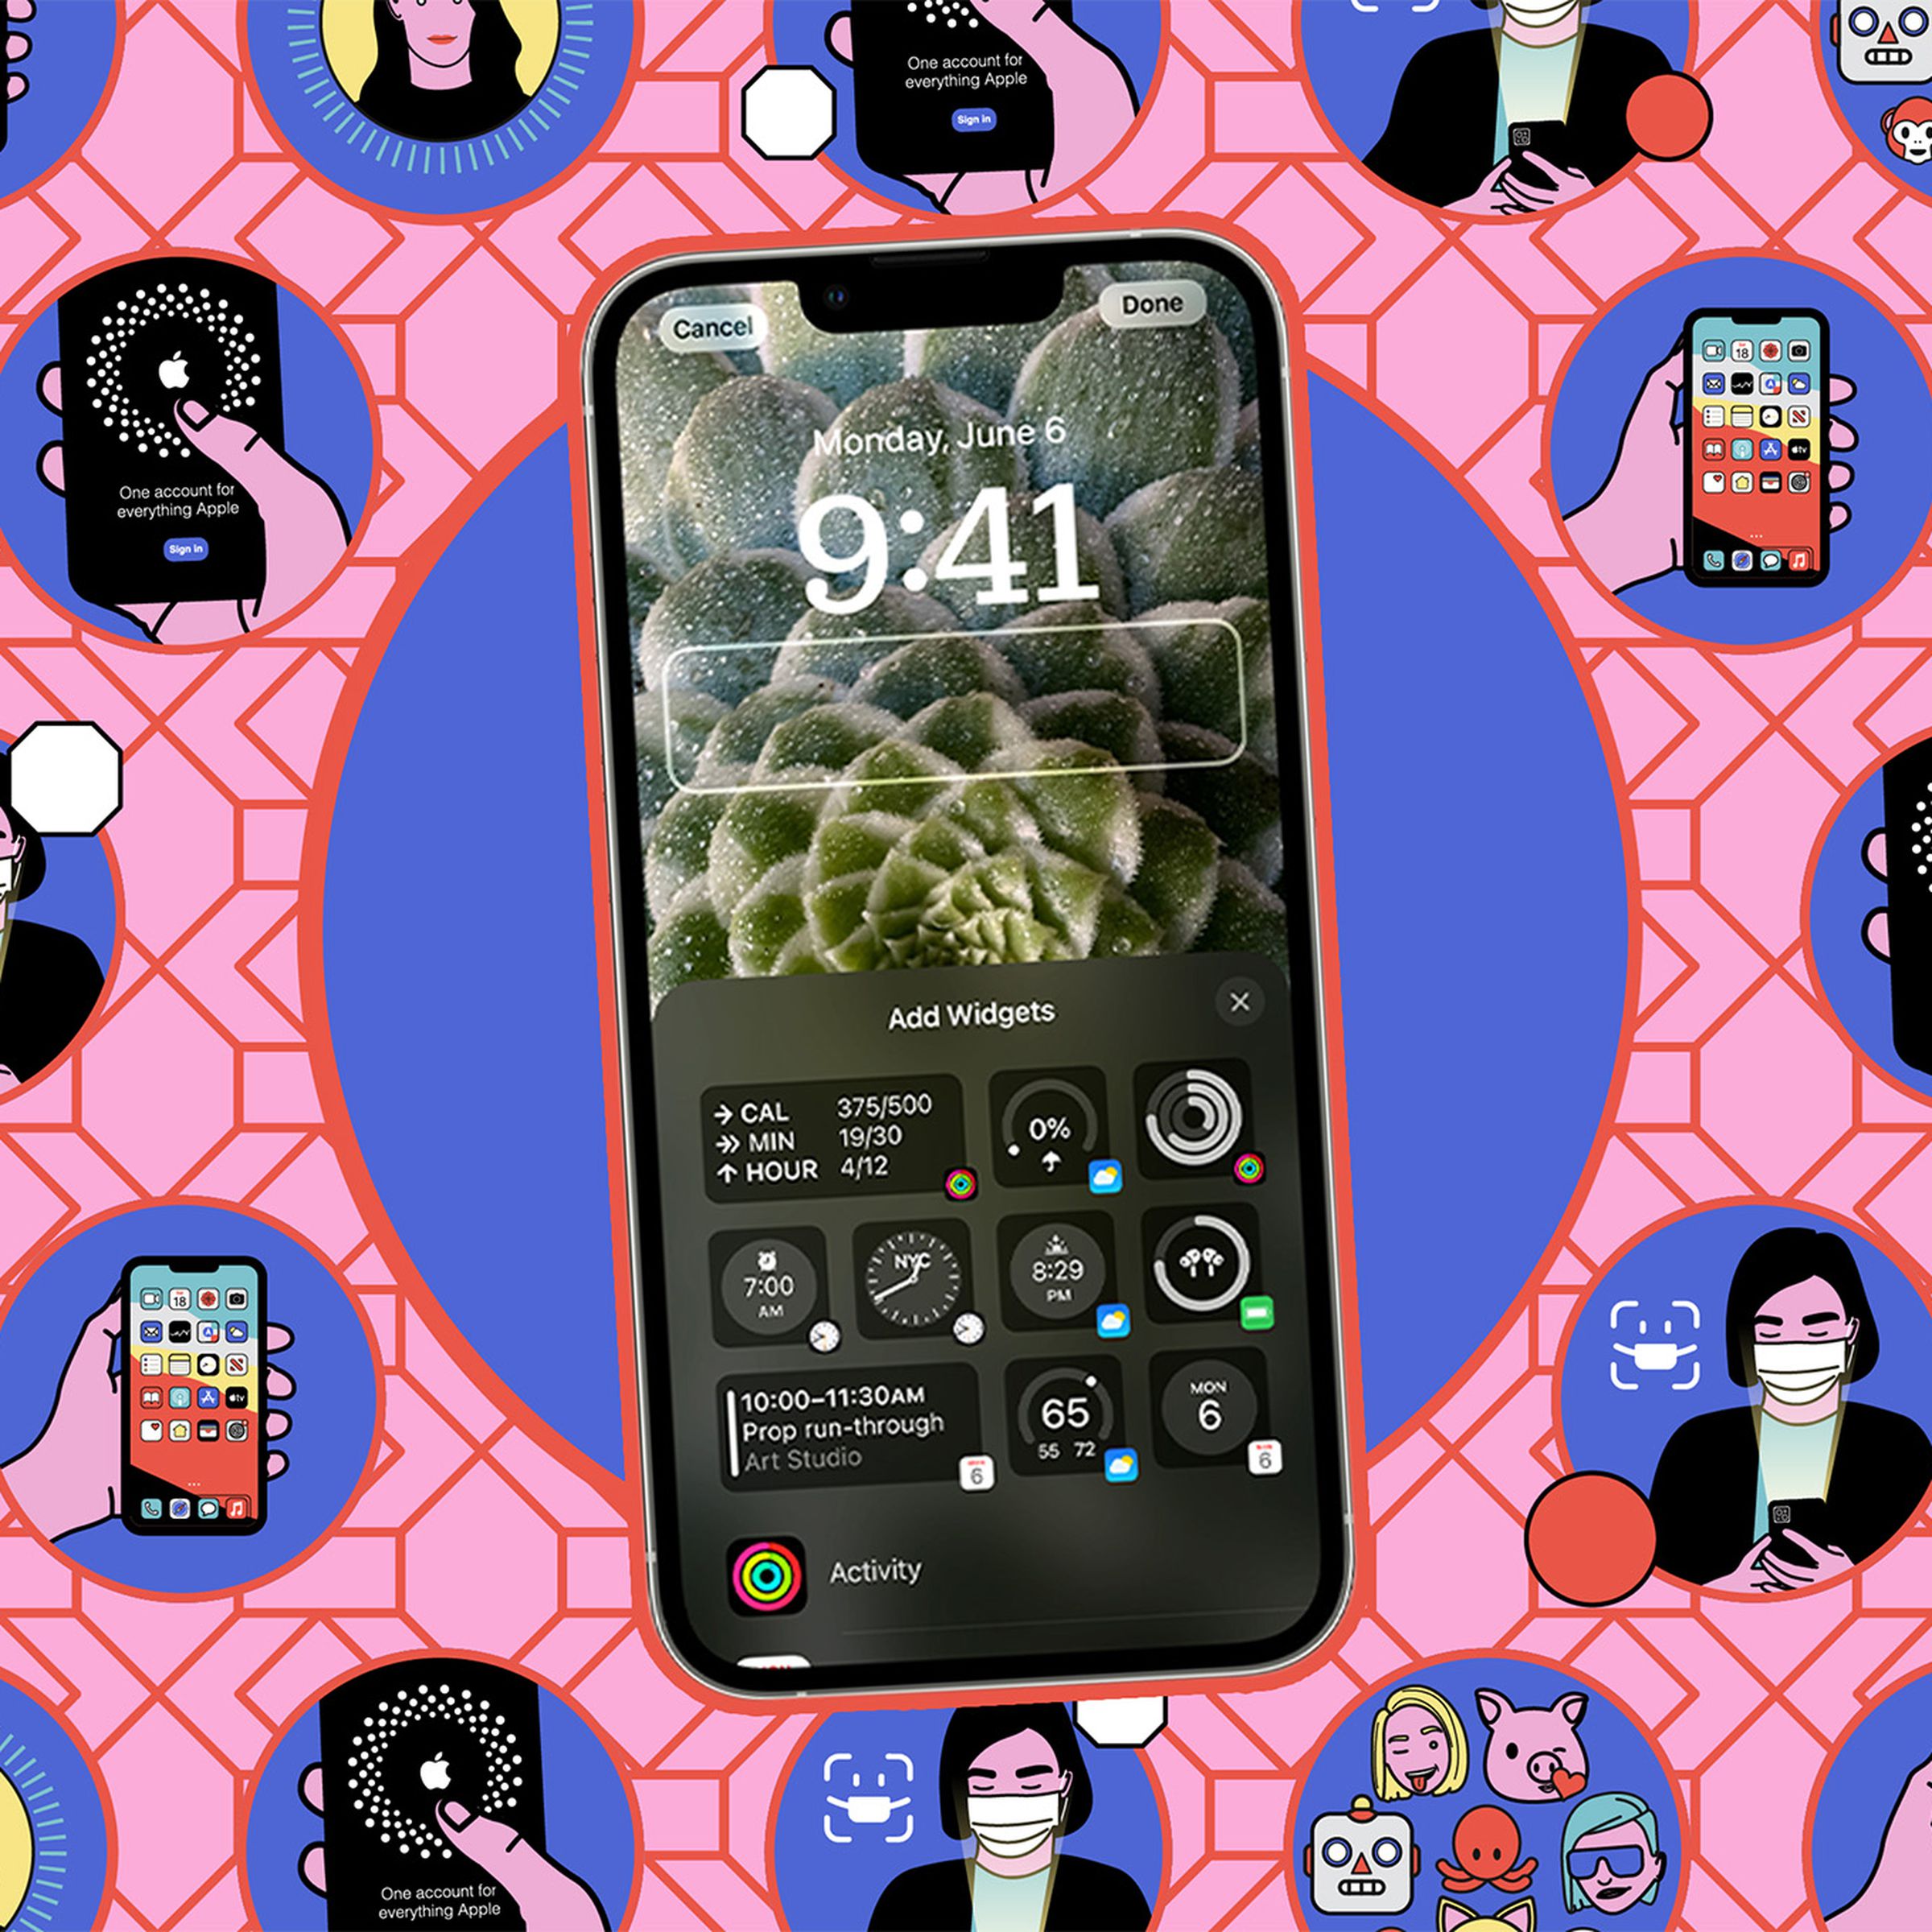 Lock screen widget screen on iPhone against an artful background